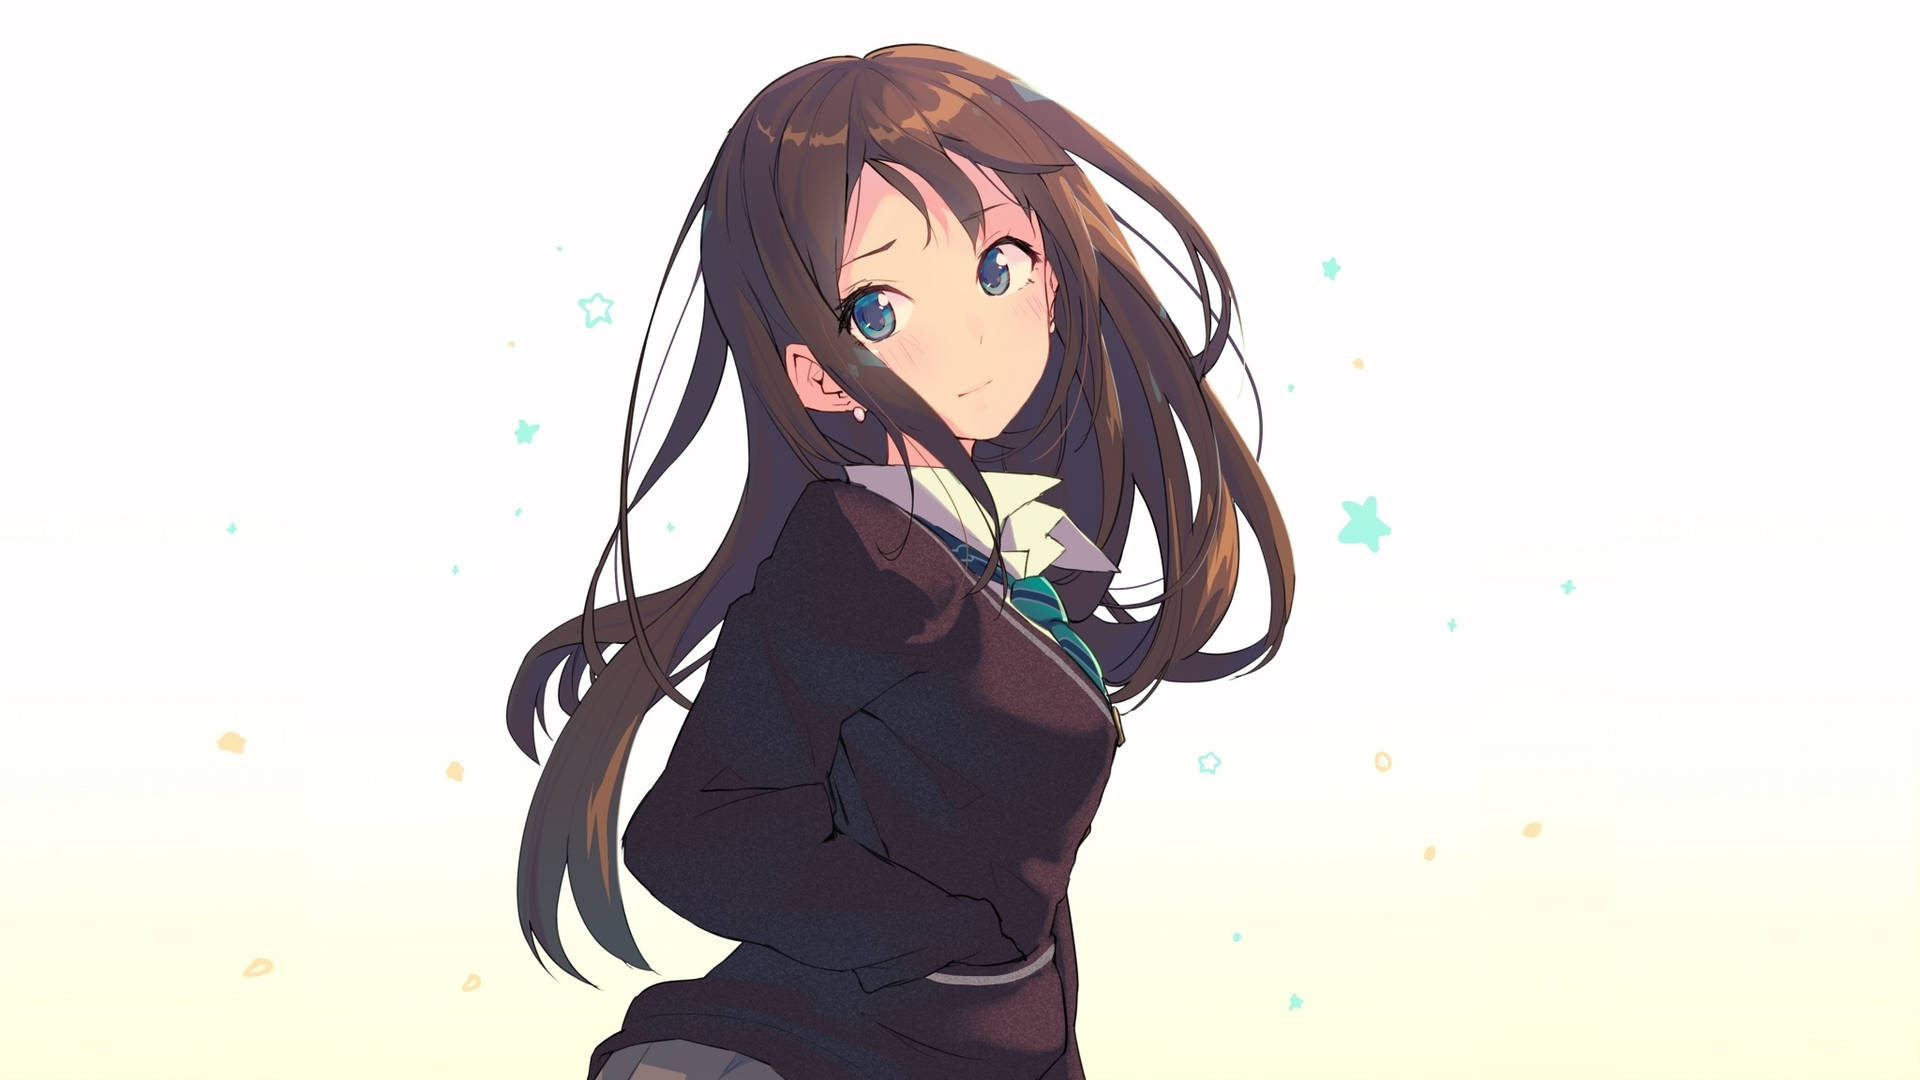 Anime Art Girl Wearing Uniform Background